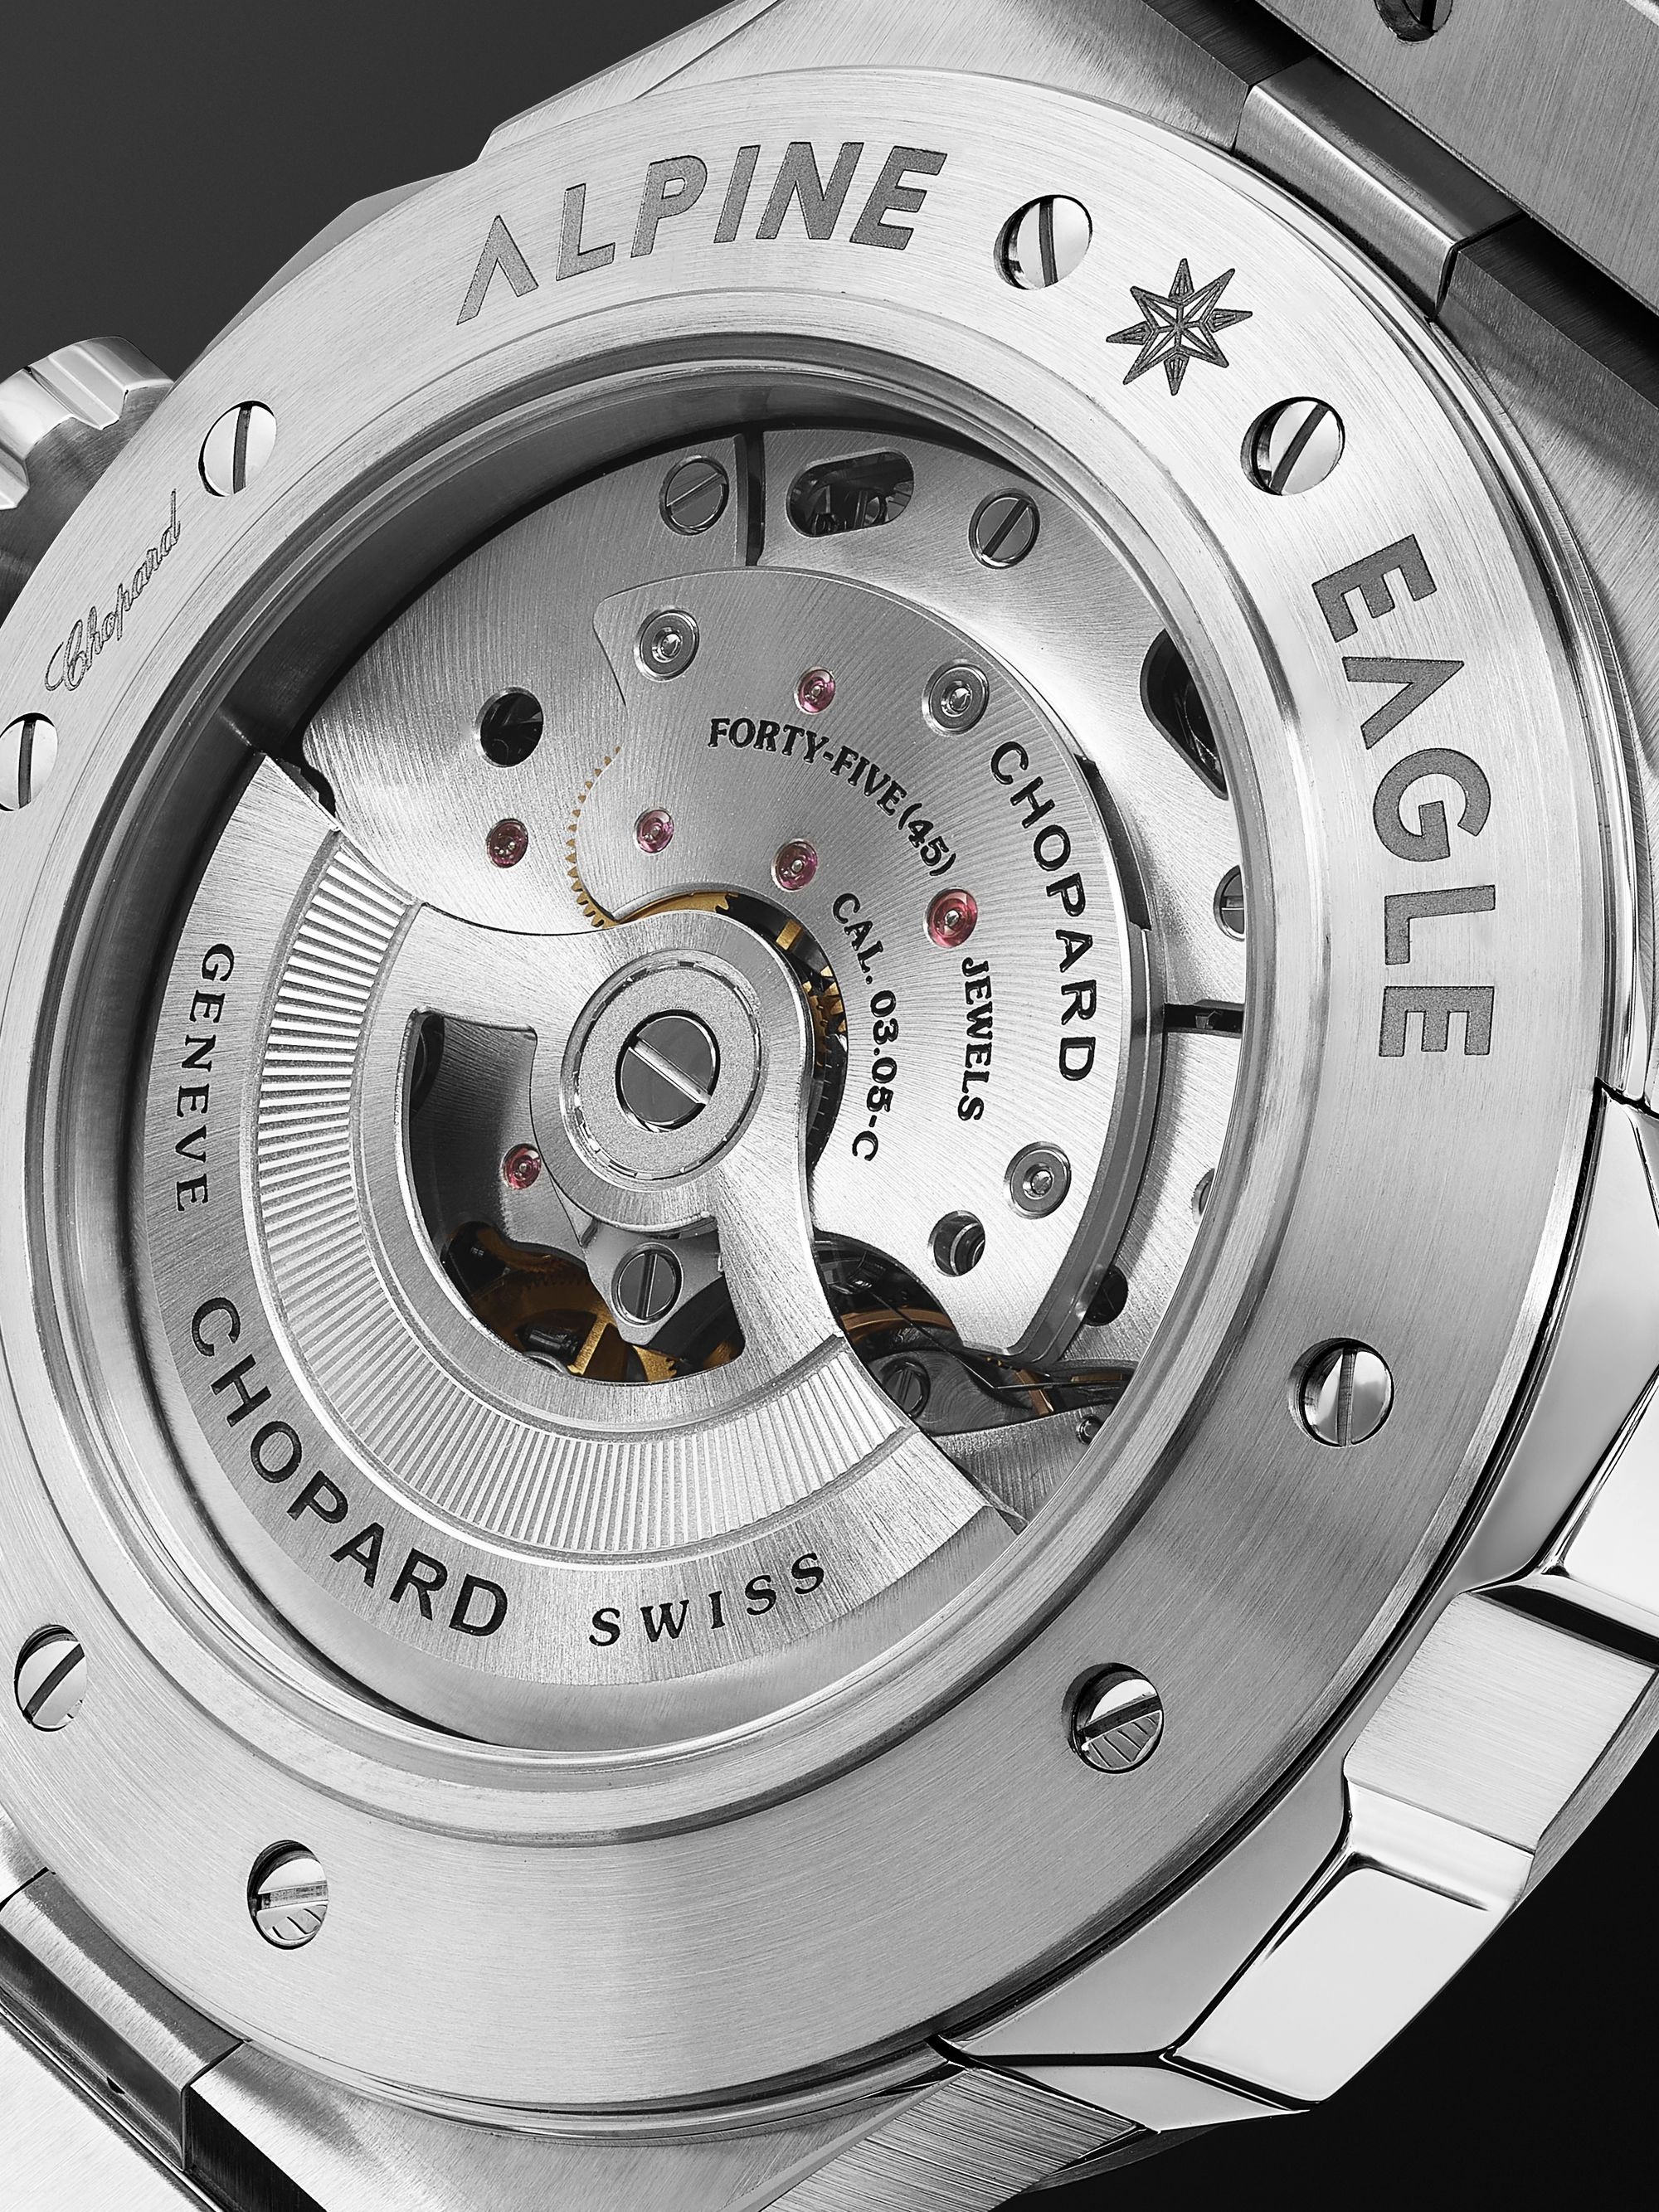 CHOPARD Alpine Eagle XL Chrono Automatic 44mm Lucent Steel Watch, Ref. No. 298609-3002